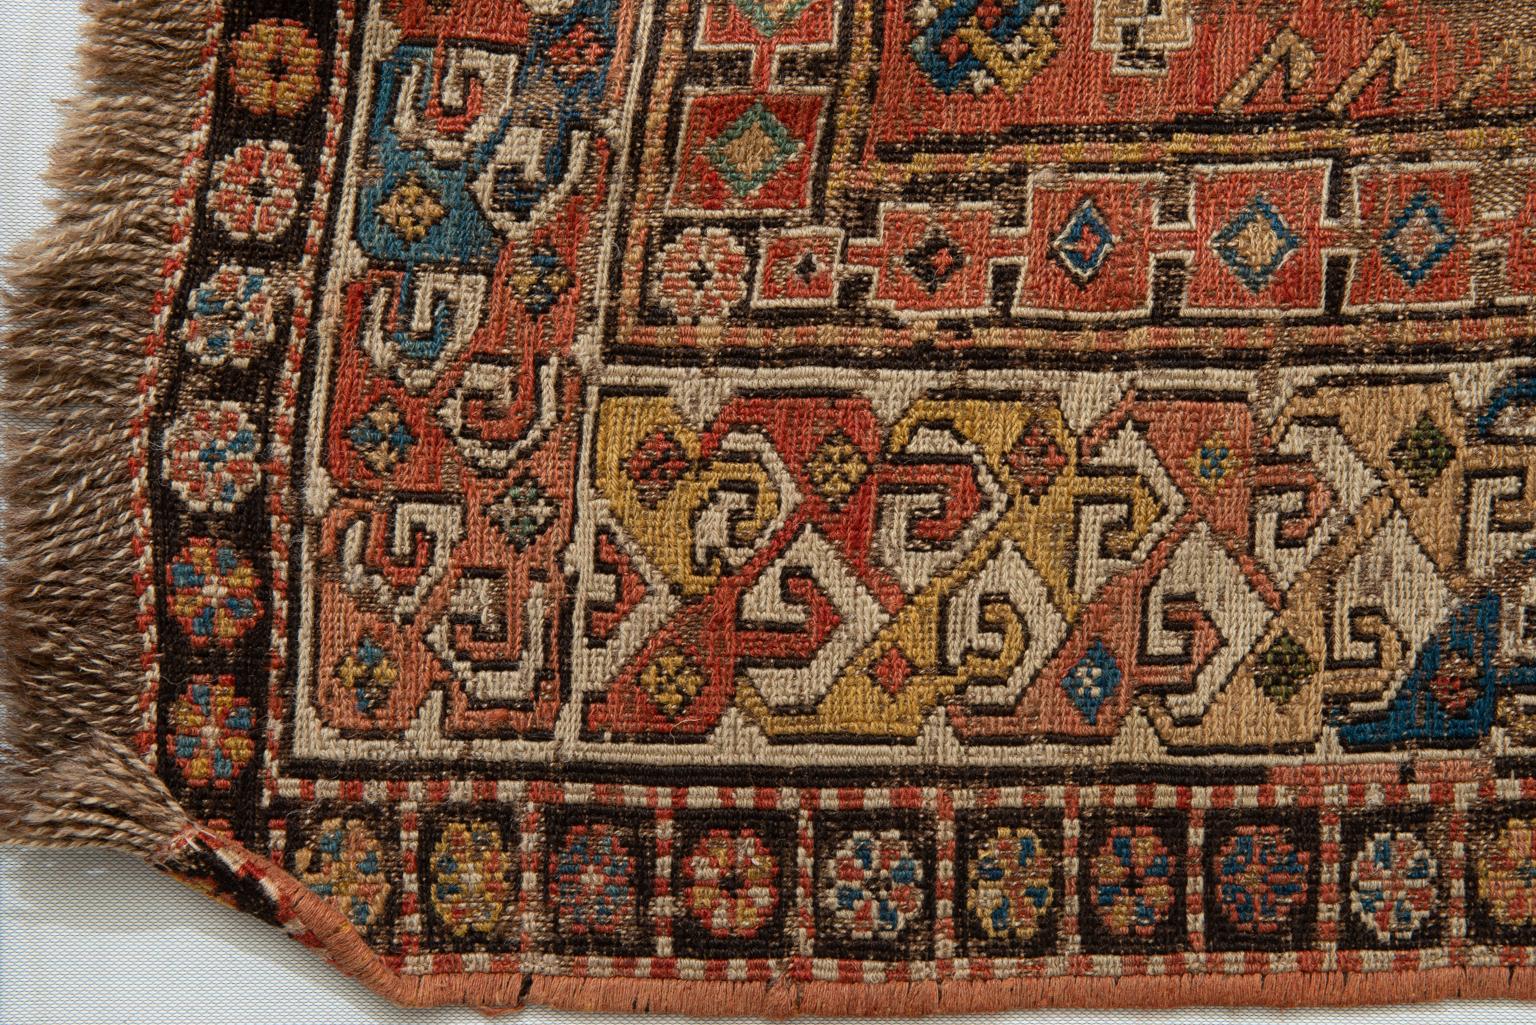 Fragment of Antique Sumakh Carpet with Original Colors For Sale 3